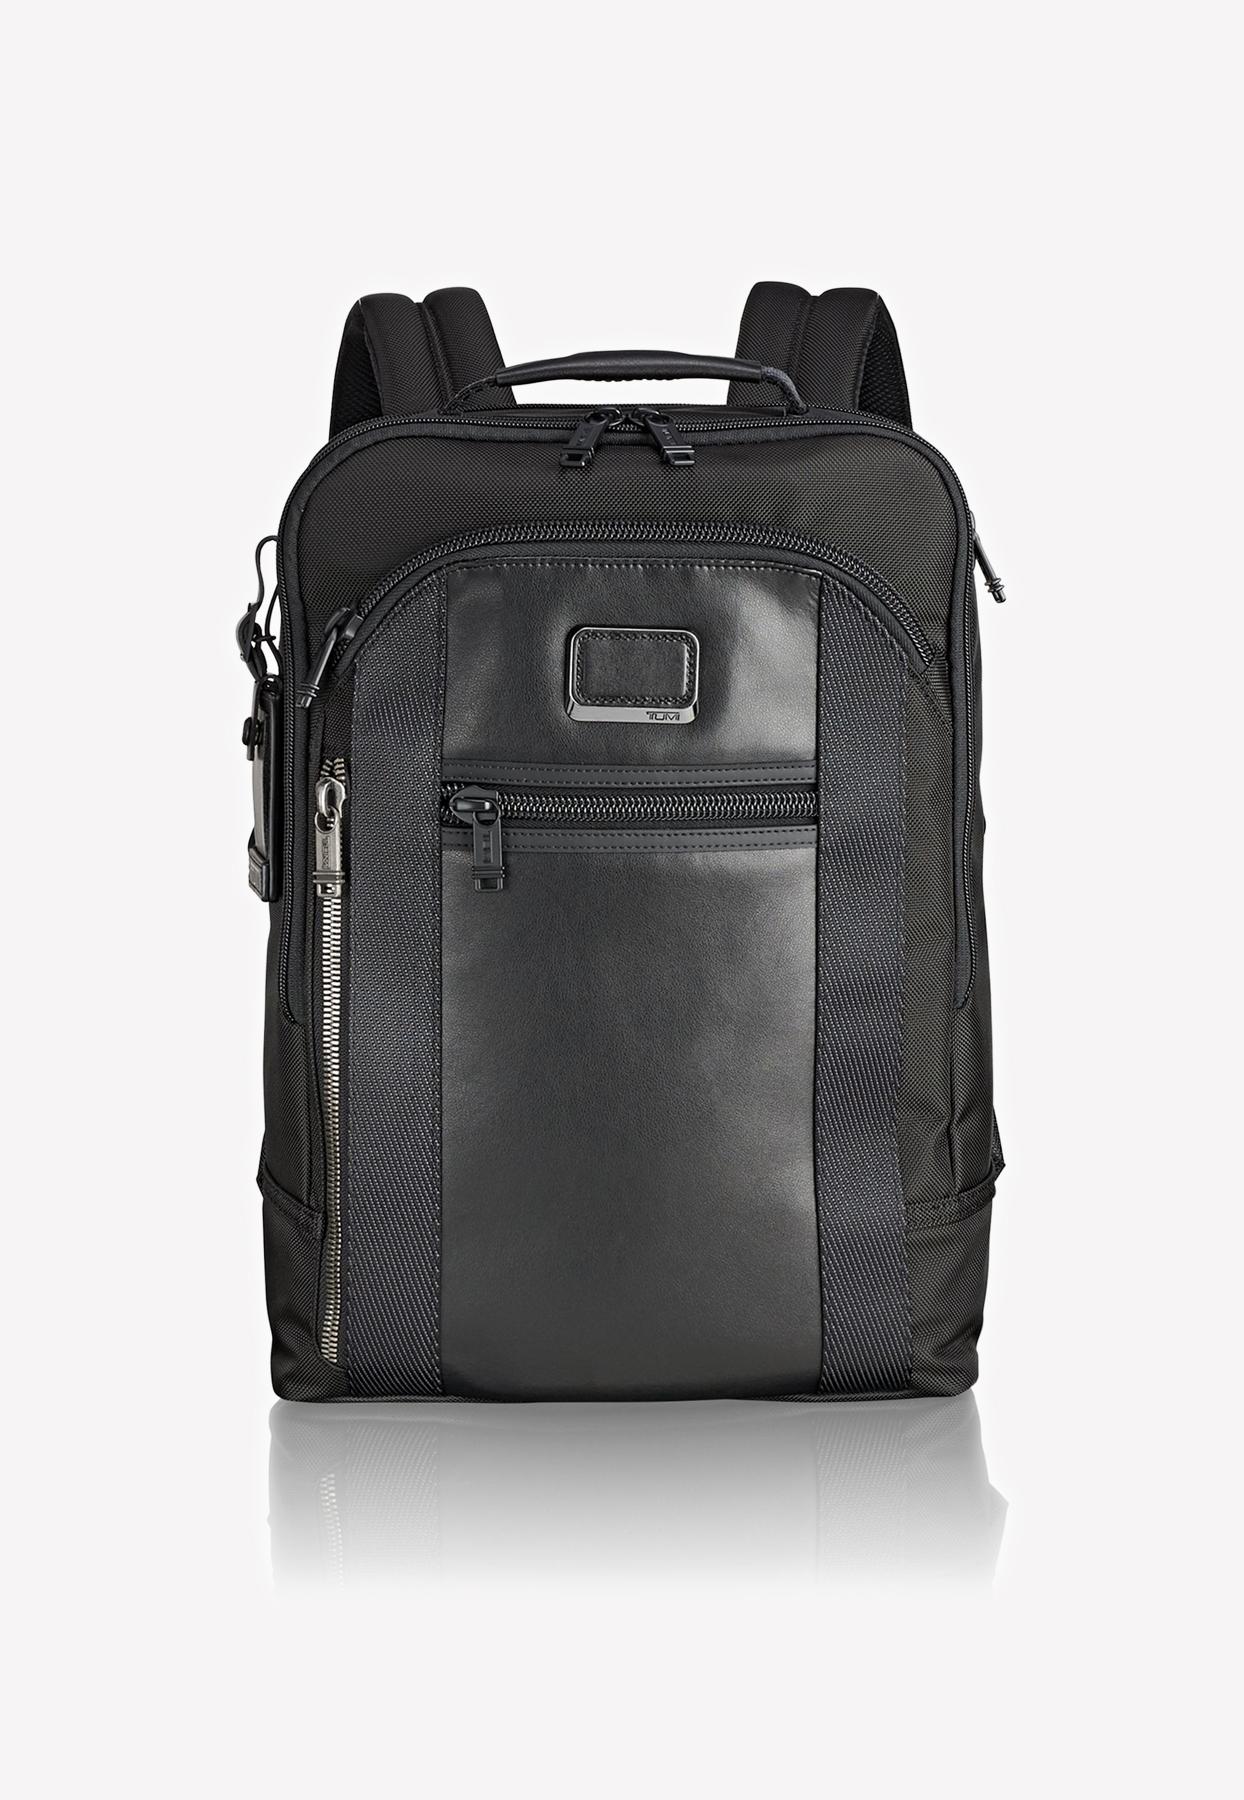 Tumi Synthetic Alpha Bravo Davis Backpack in Black for Men - Lyst